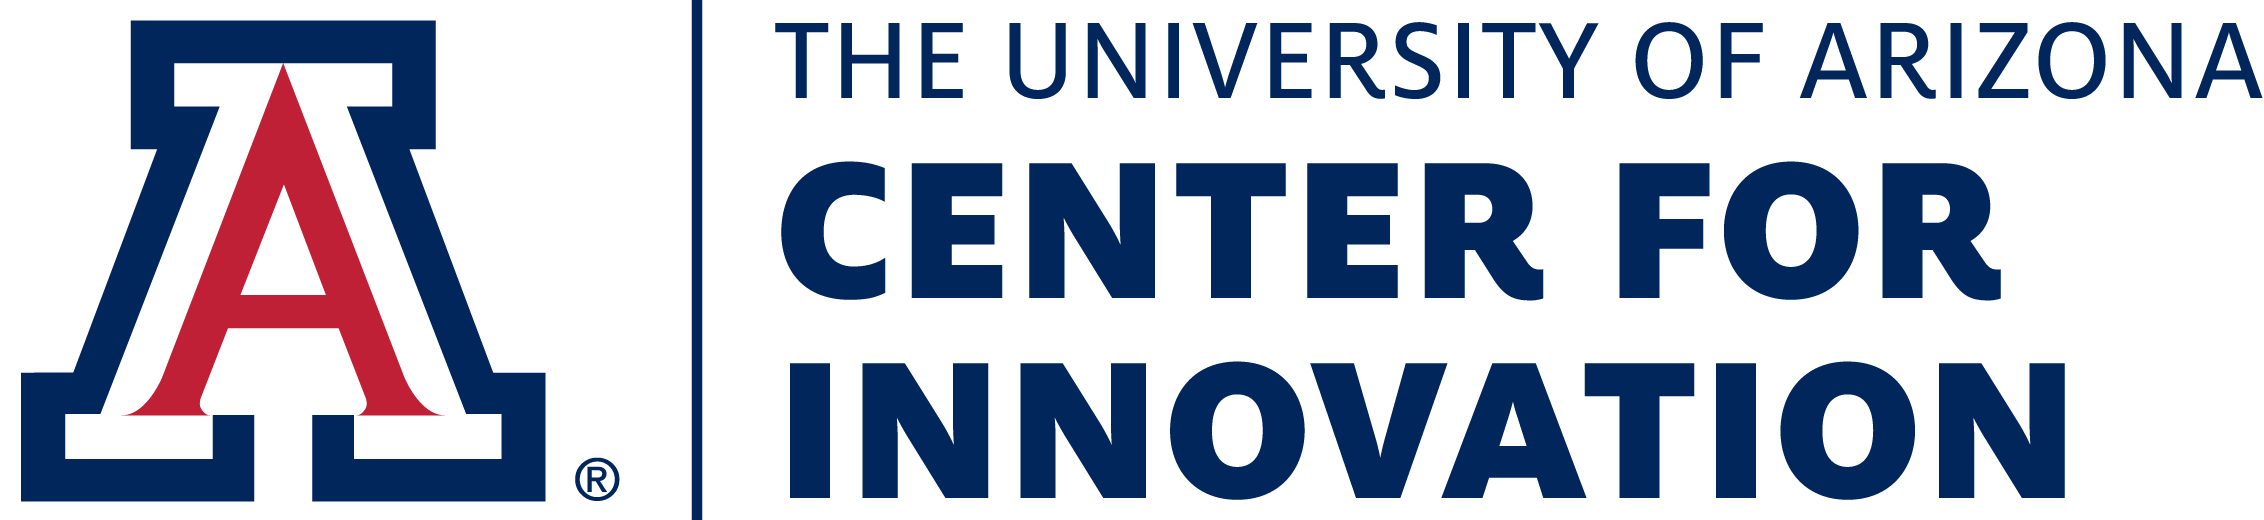 The University of Arizona Center for Innovation